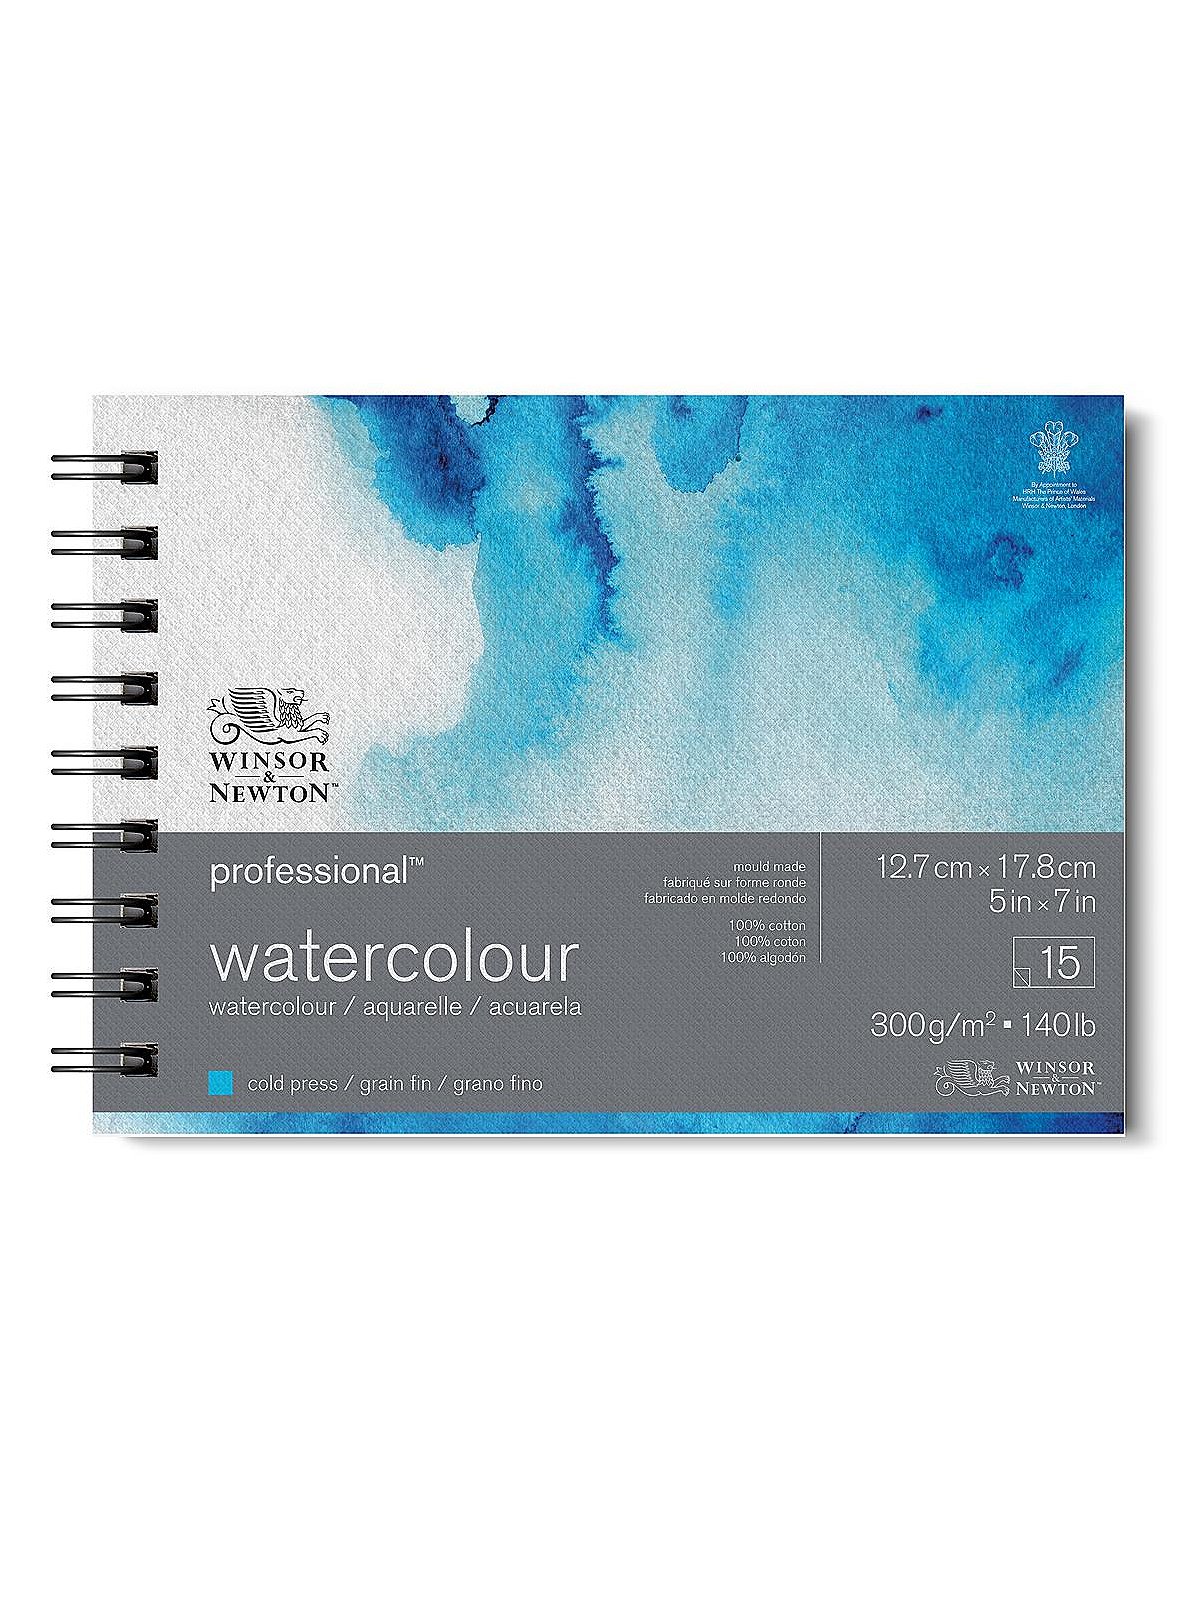 Winsor & Newton Professional Watercolor Paper Pad, 5 x 7, White